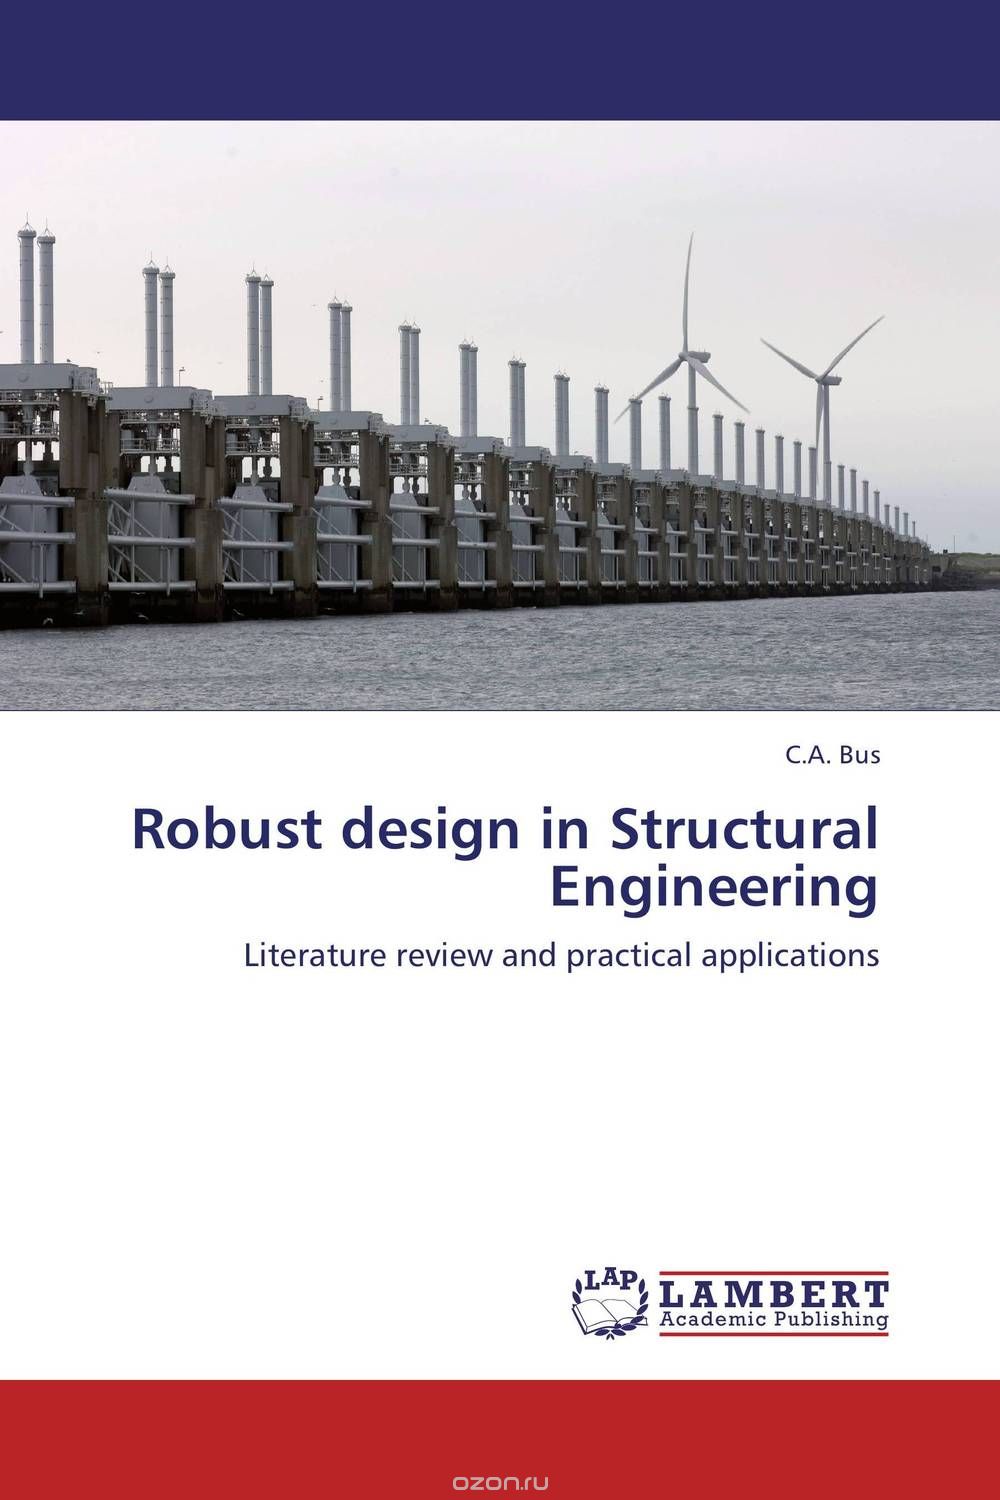 Скачать книгу "Robust design in Structural Engineering"